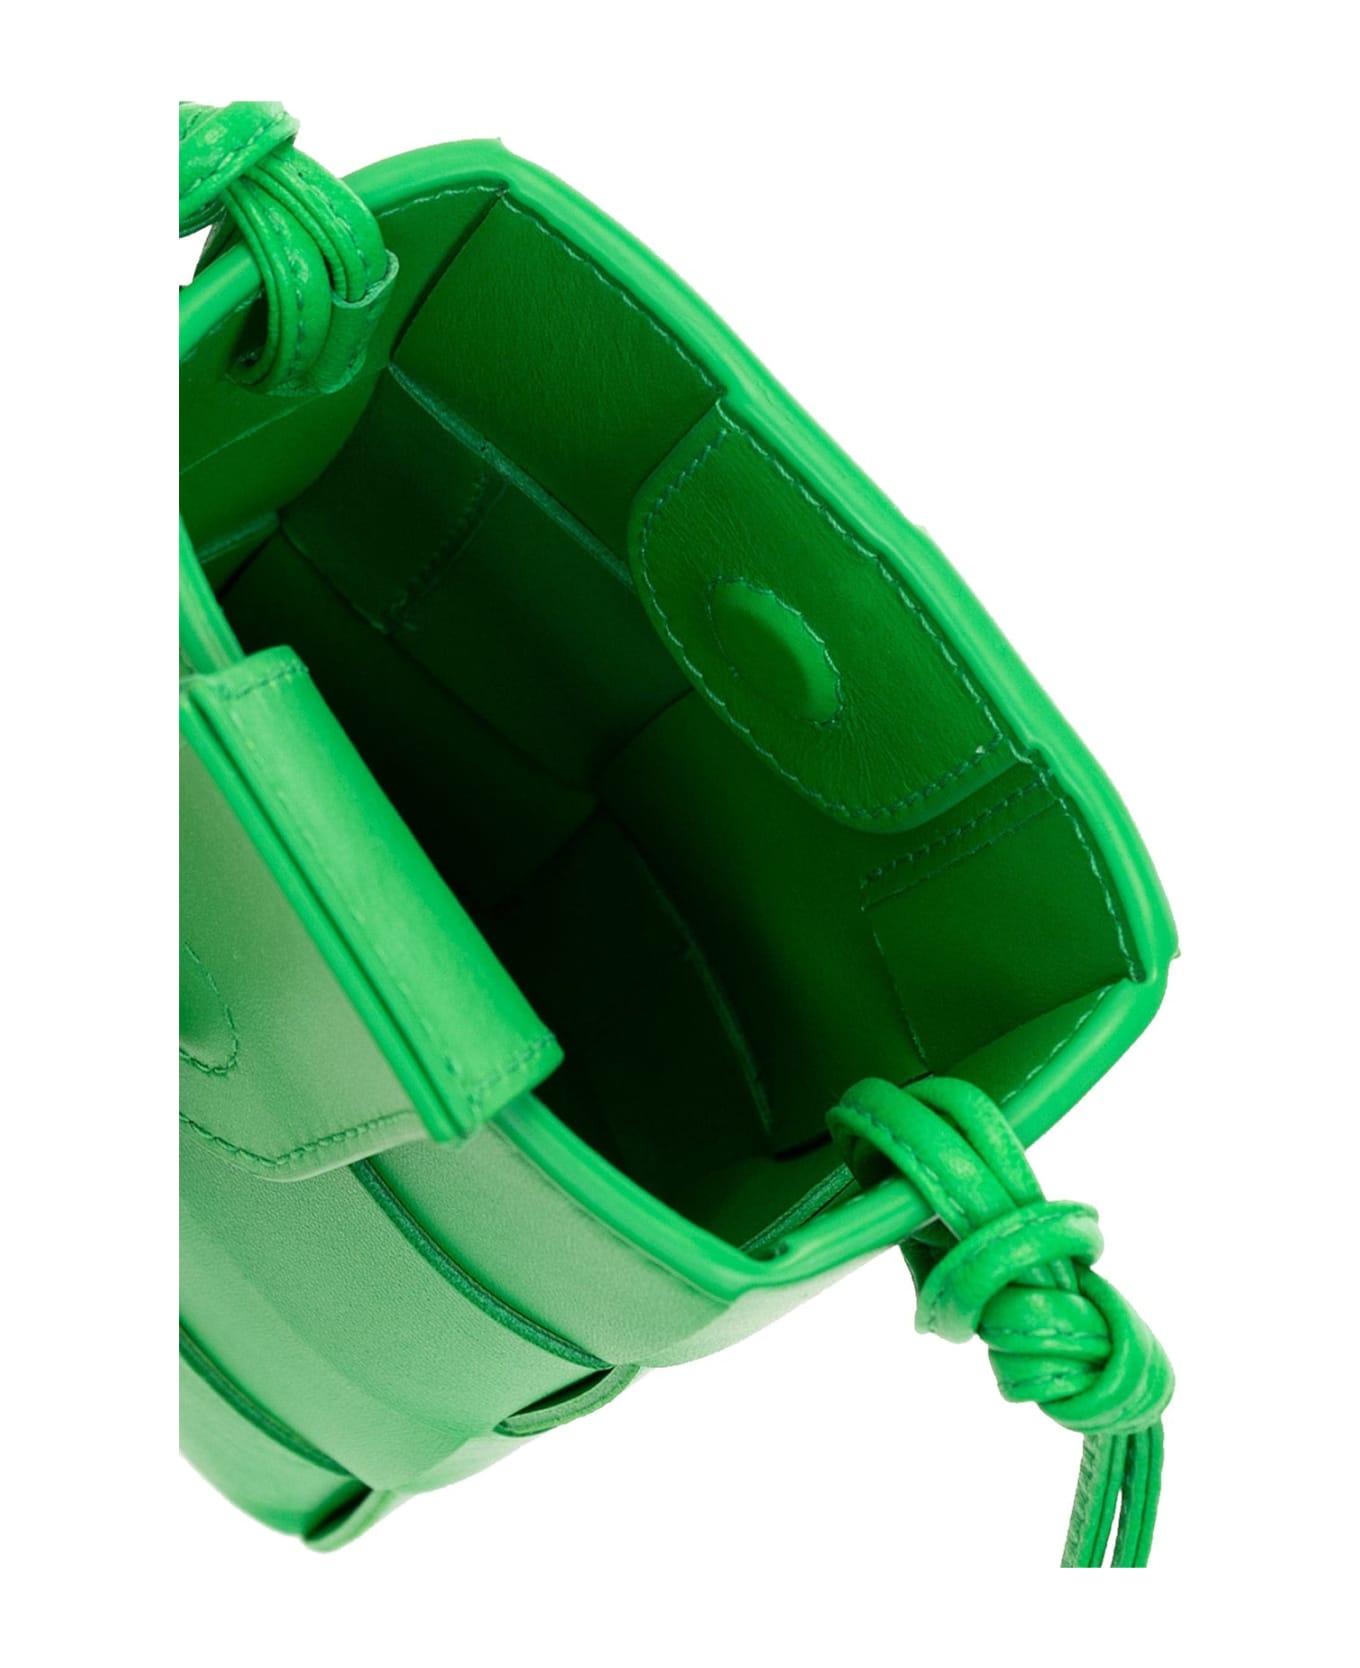 Bottega Veneta Phone Pouch Shoulder Bag - Green